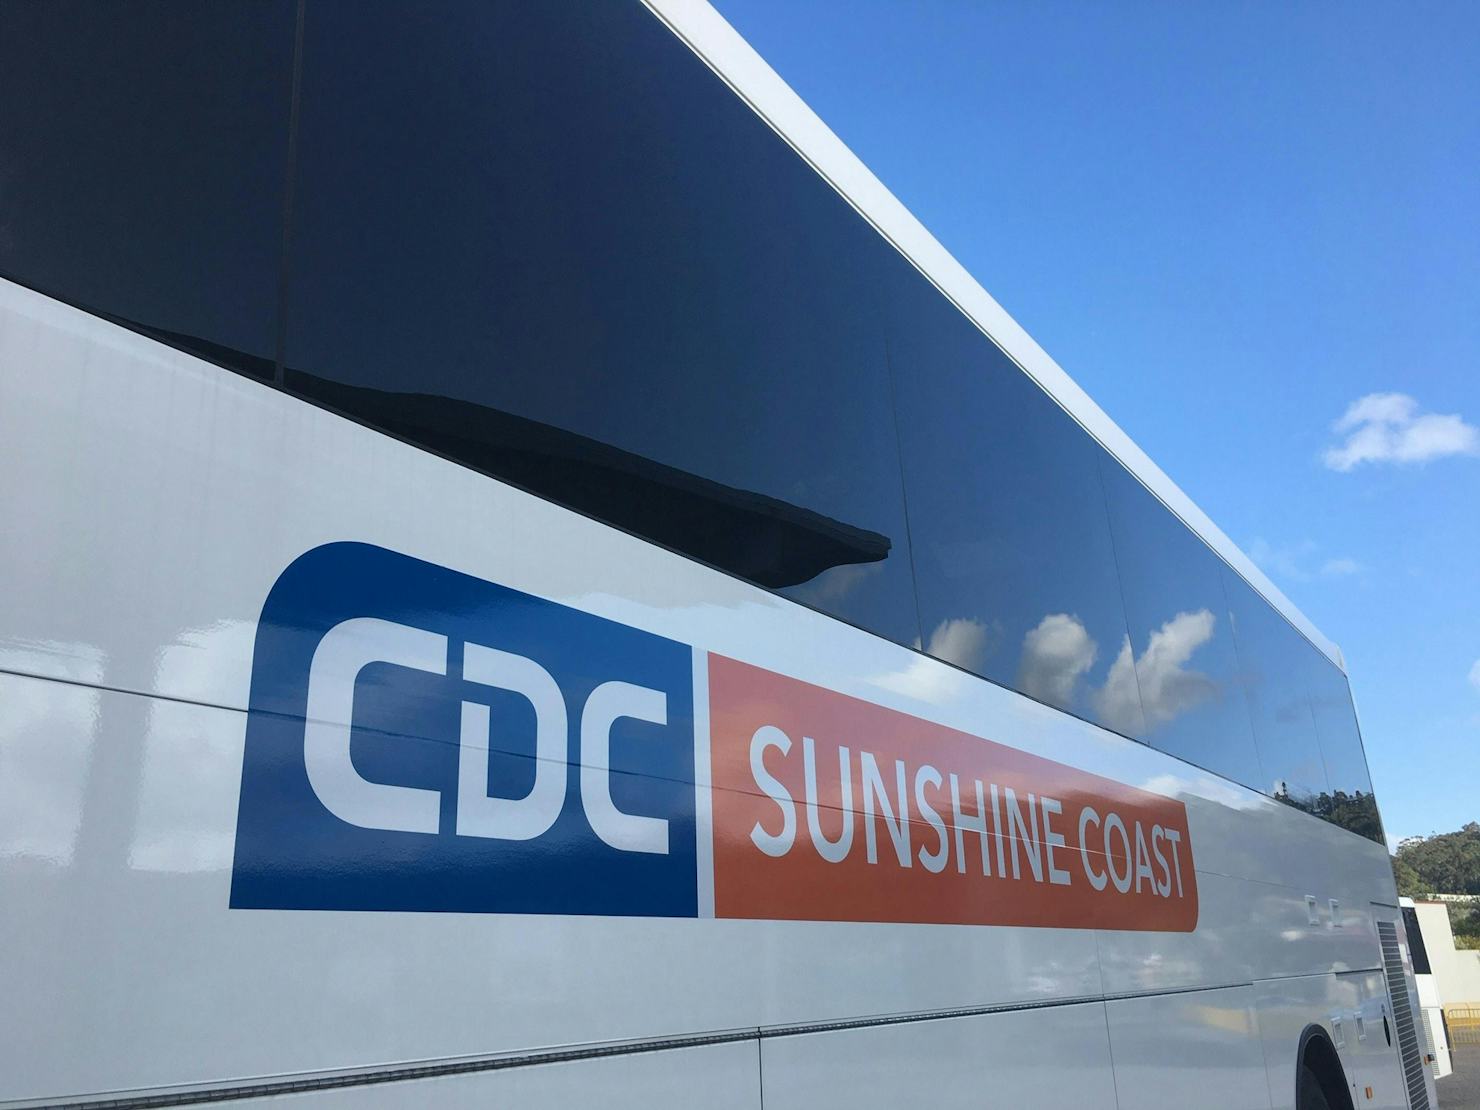 CDC Sunshine Coast